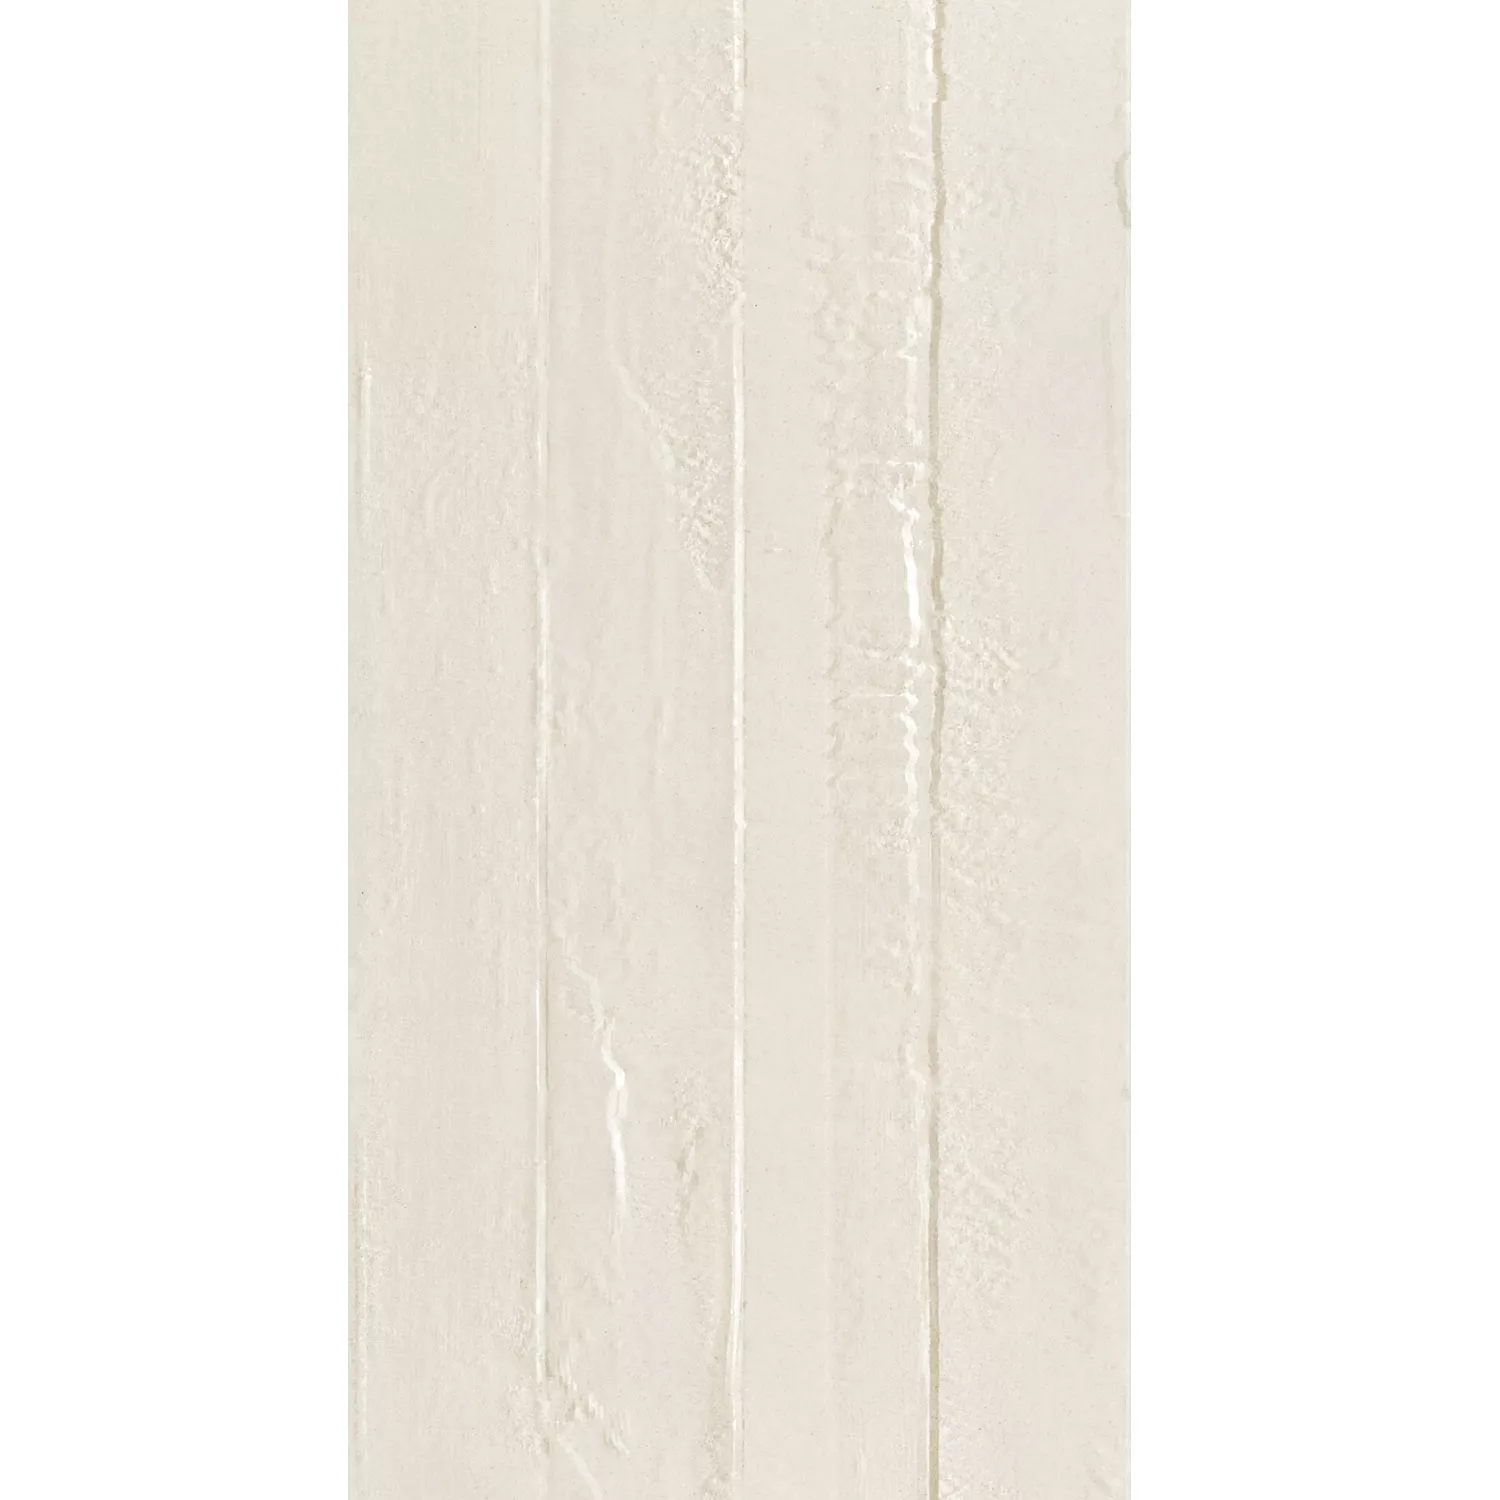 Ladrilho Olhar de Pedra Lobetal Marfim 45x90cm